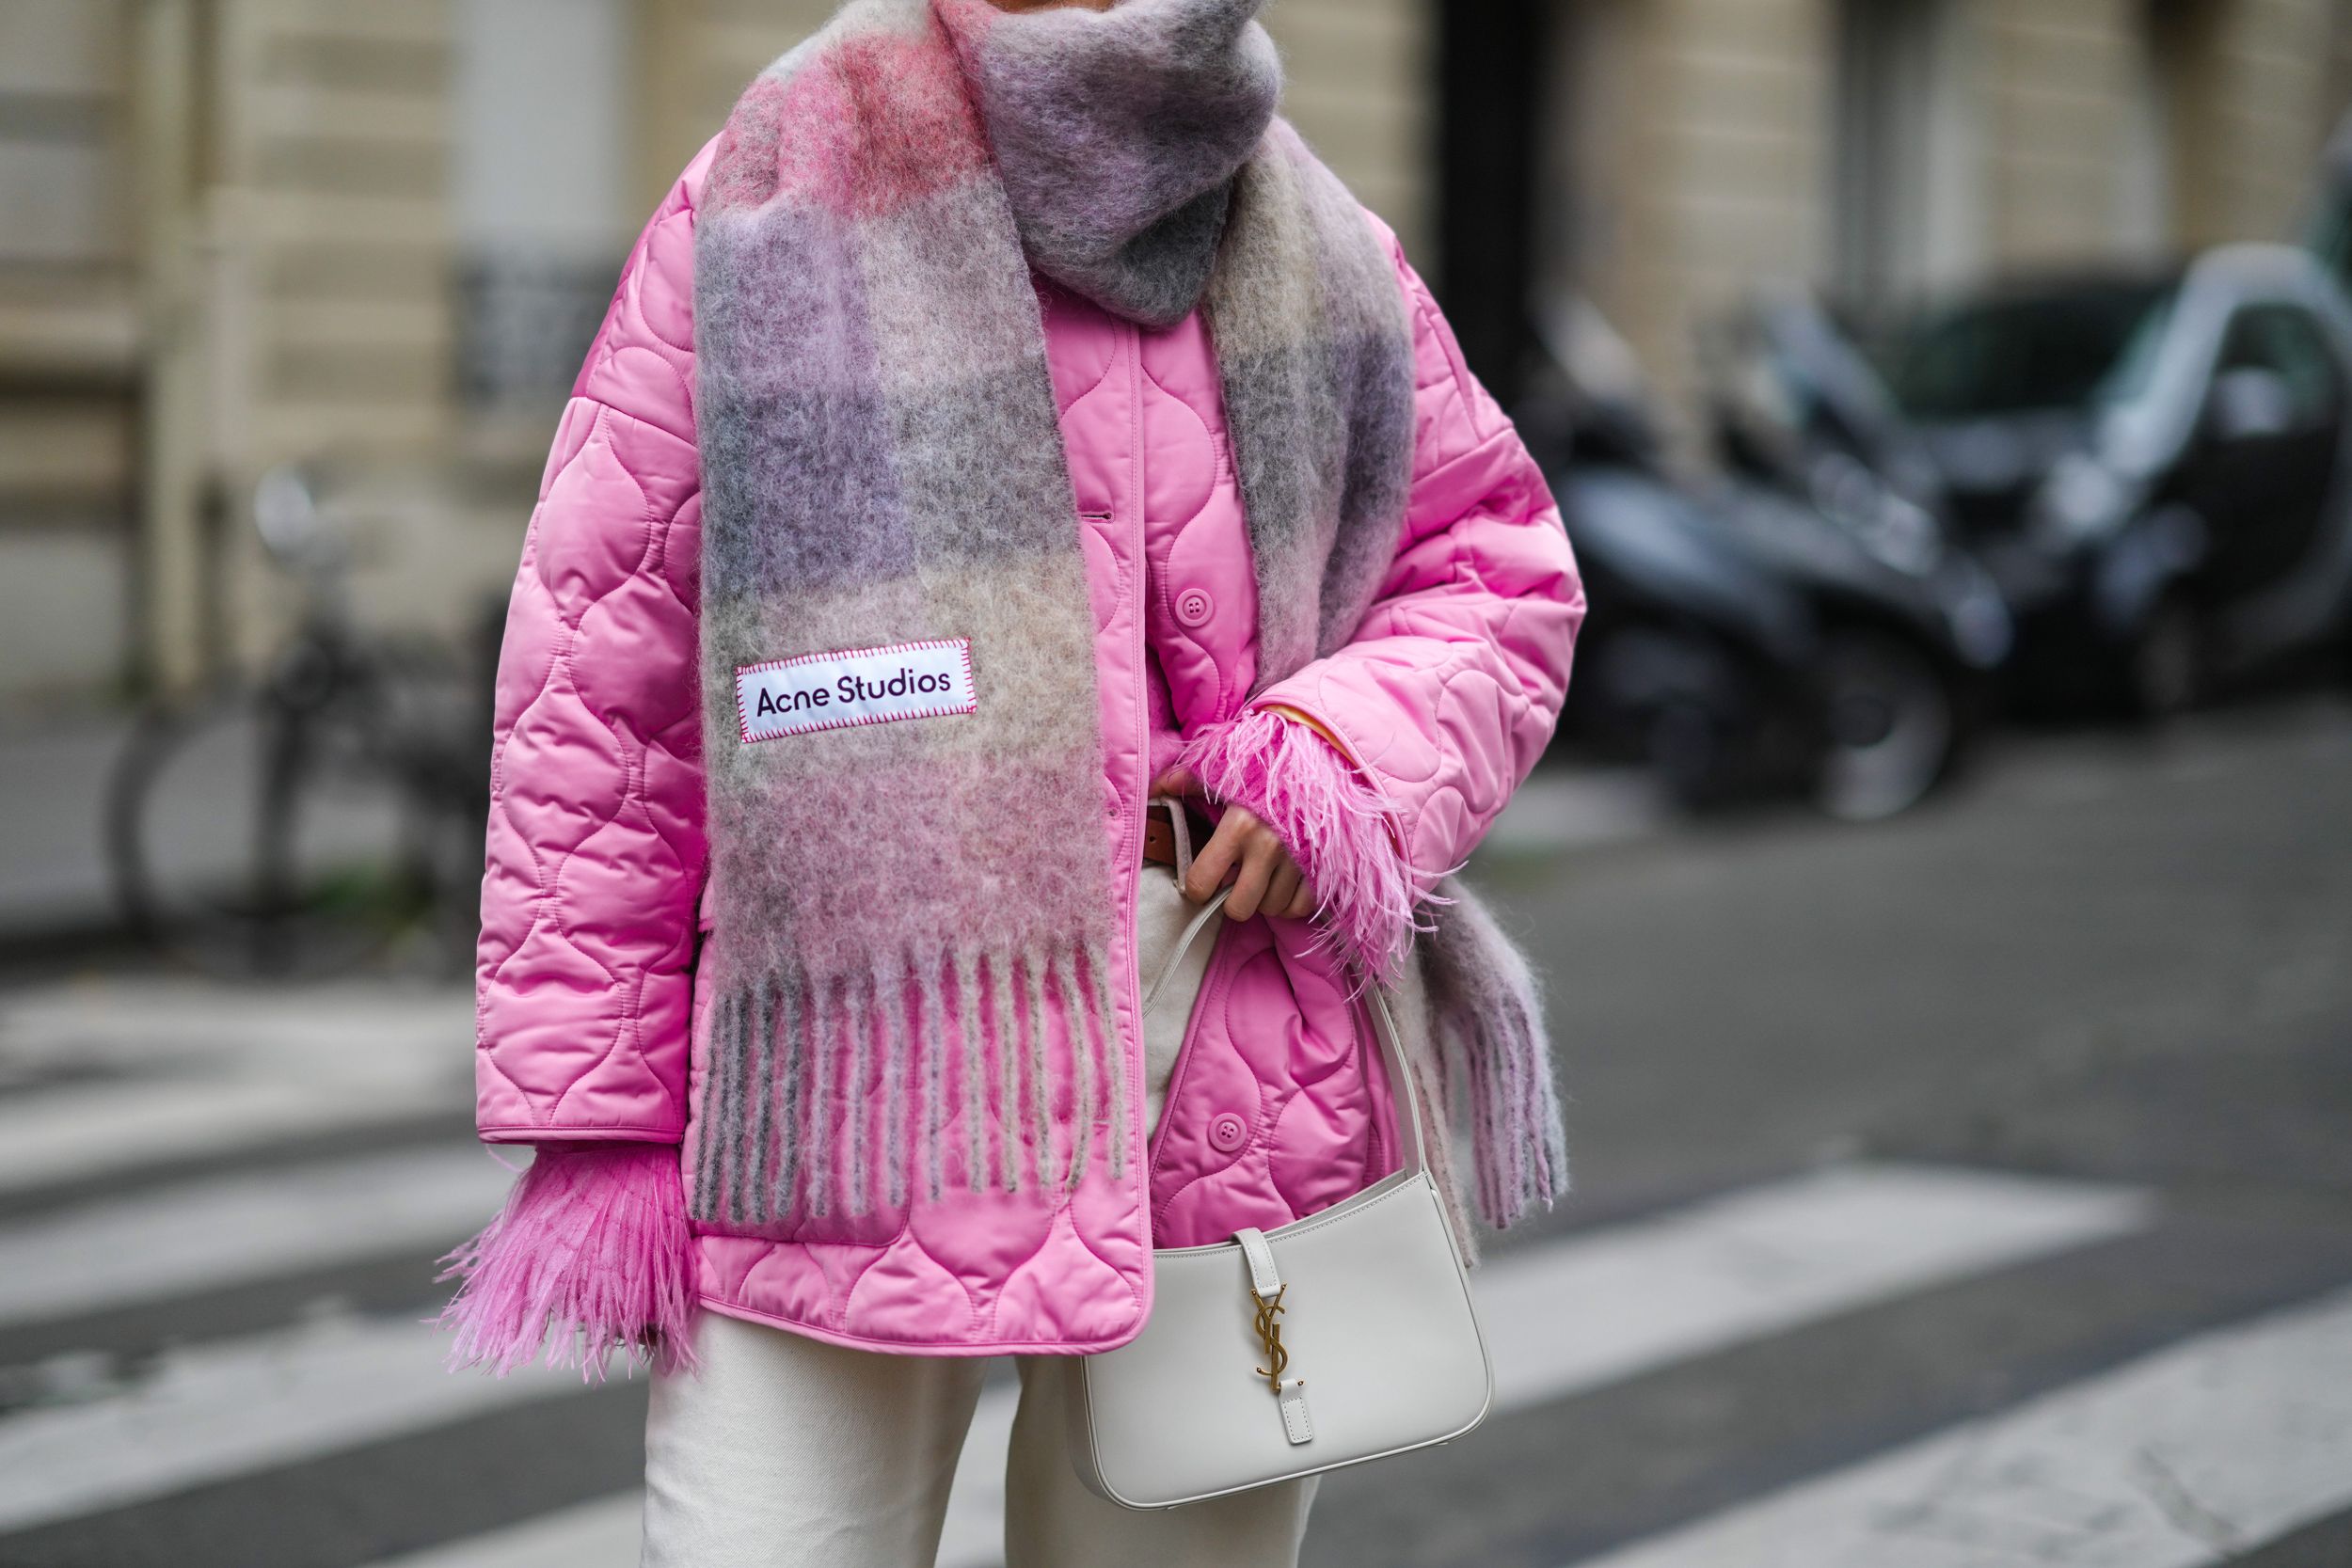 Mejor ropa térmica para frío extremo ❄️ - Periodista Digital